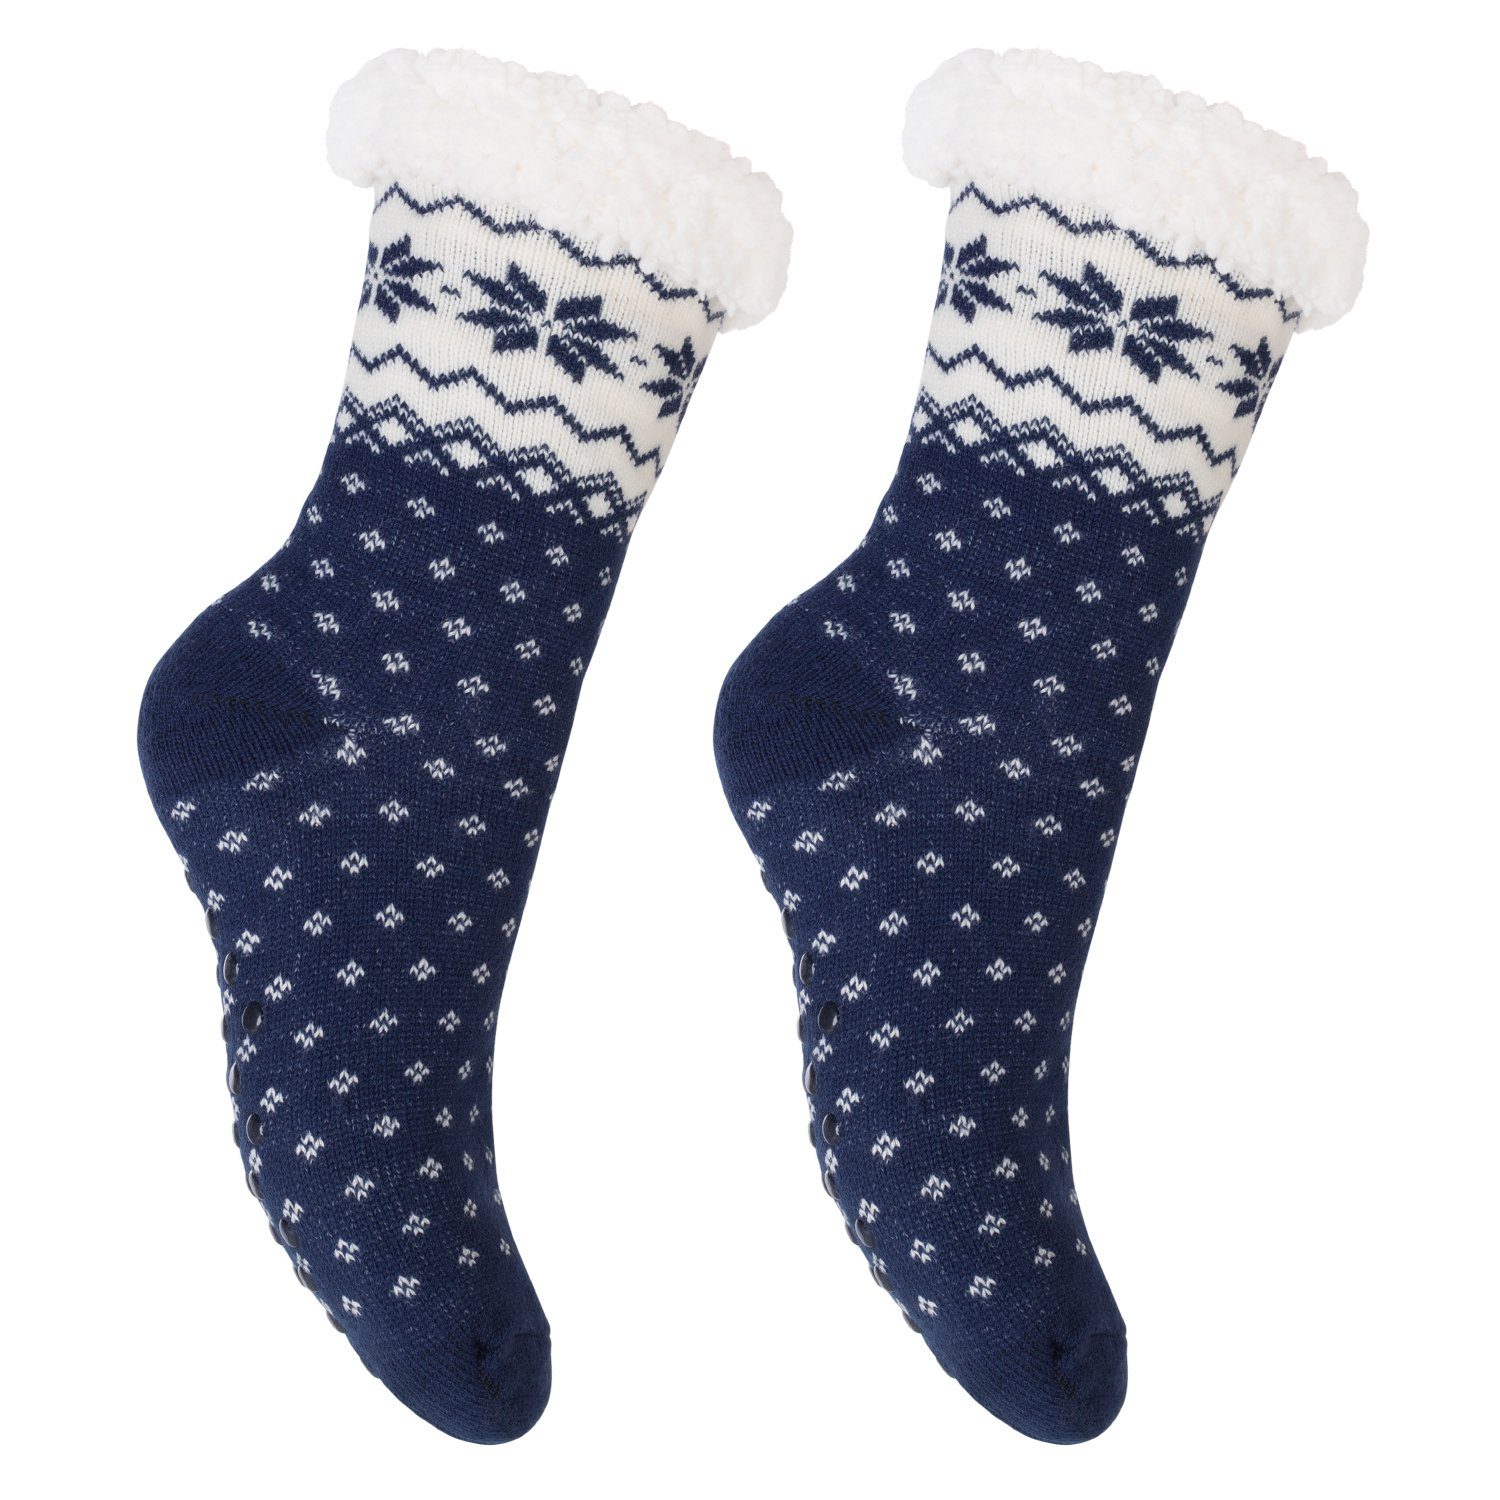 Footstar ABS-Socken Winter Haussocken für Damen & Herren (1/2 Paar) Kuschelsocken 2 x Blau